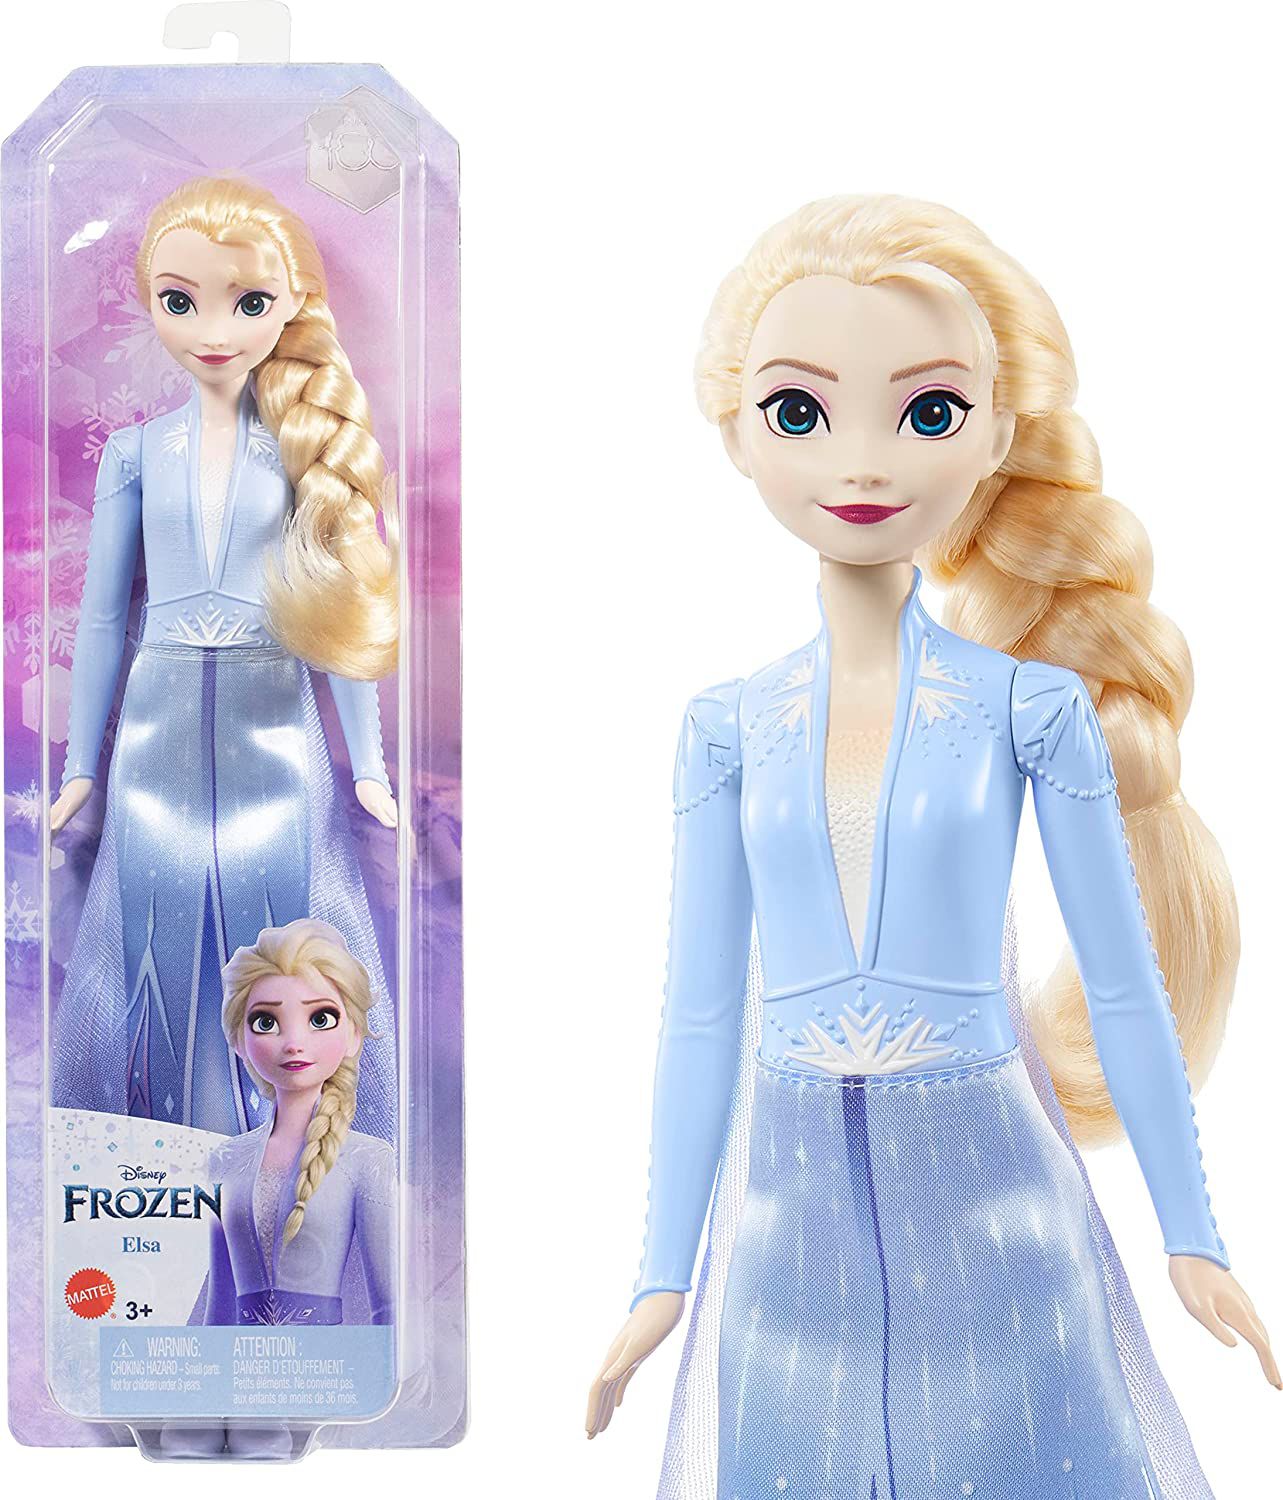 Boneca Frozen 2 - Rainha anna 28 cm - Disney - Hasbro - Bonecas